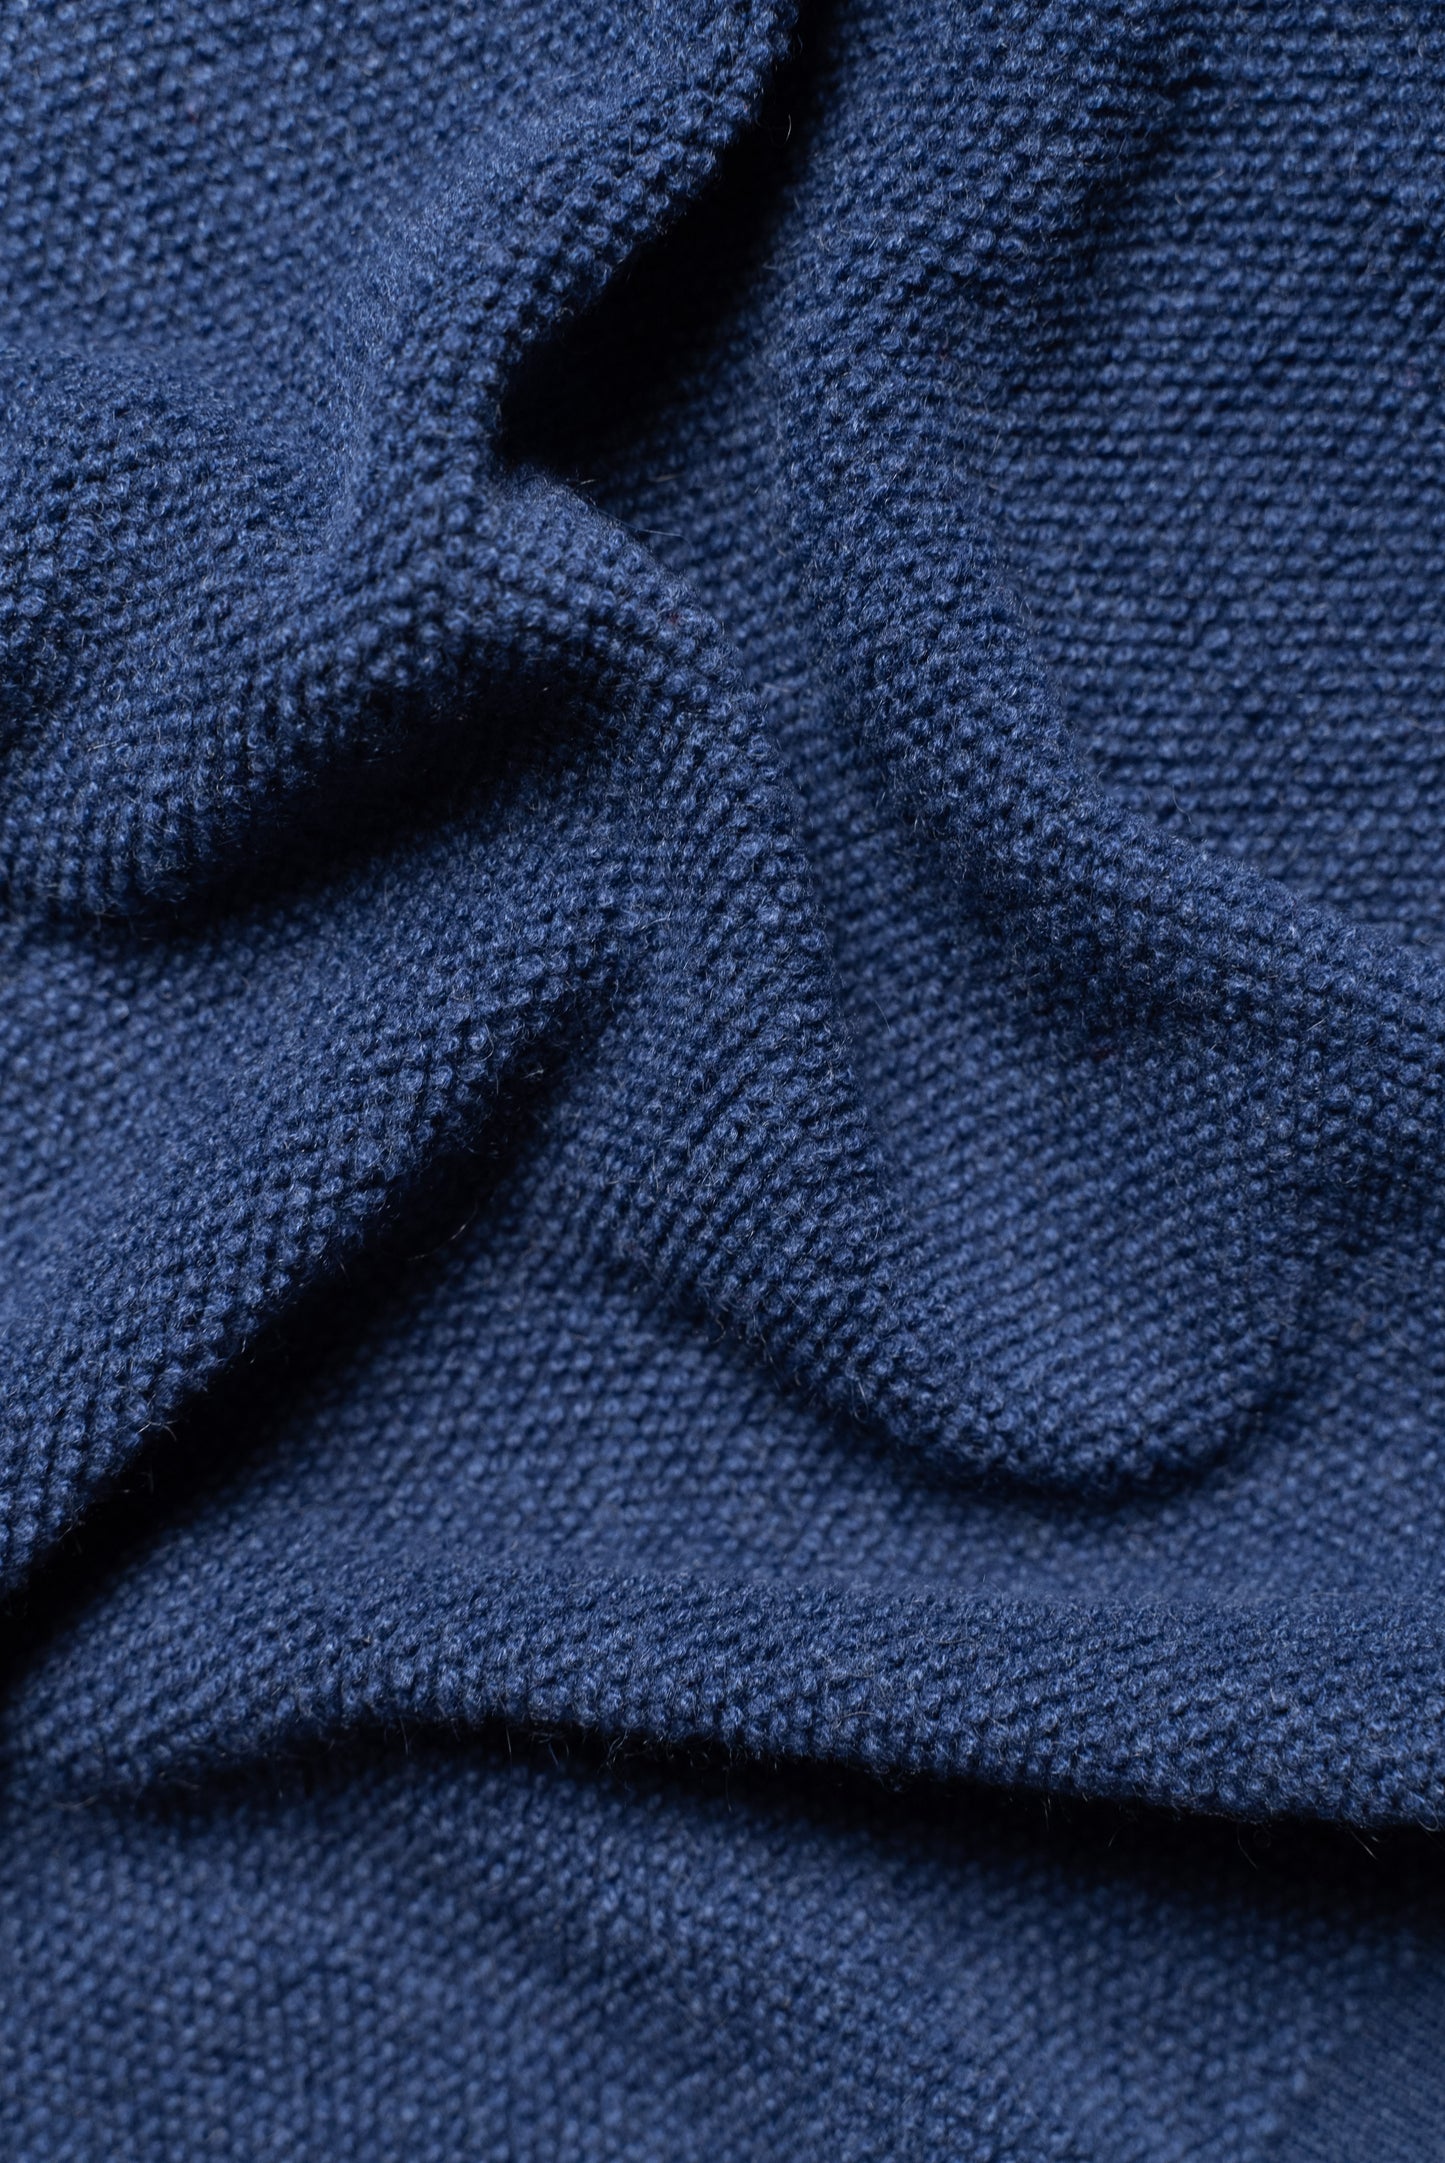 Cashmere sweatshirt with blue hood